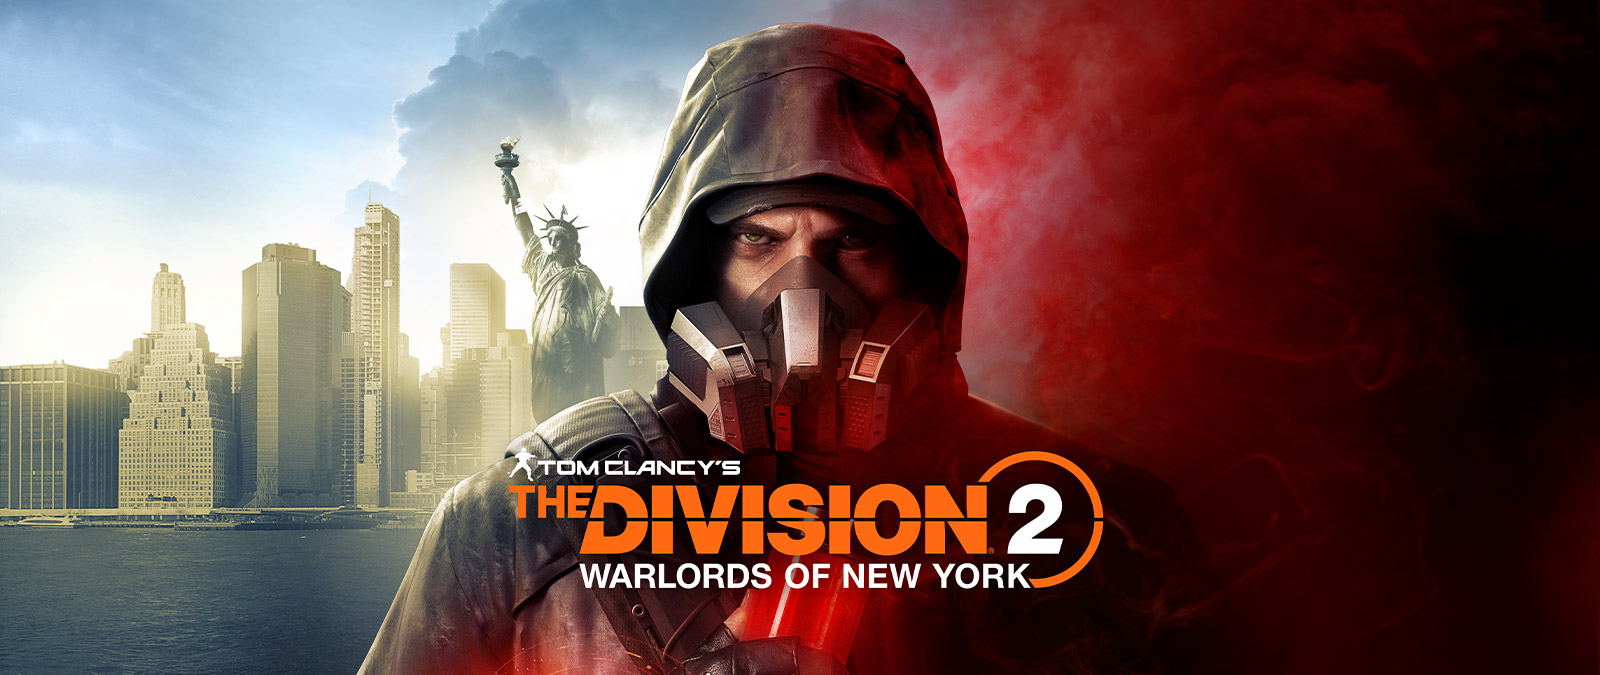 Tom Clancy’s The Division 2: Warlords of New York, Аарон Кинер в противогазе стоит перед статуей Свободы